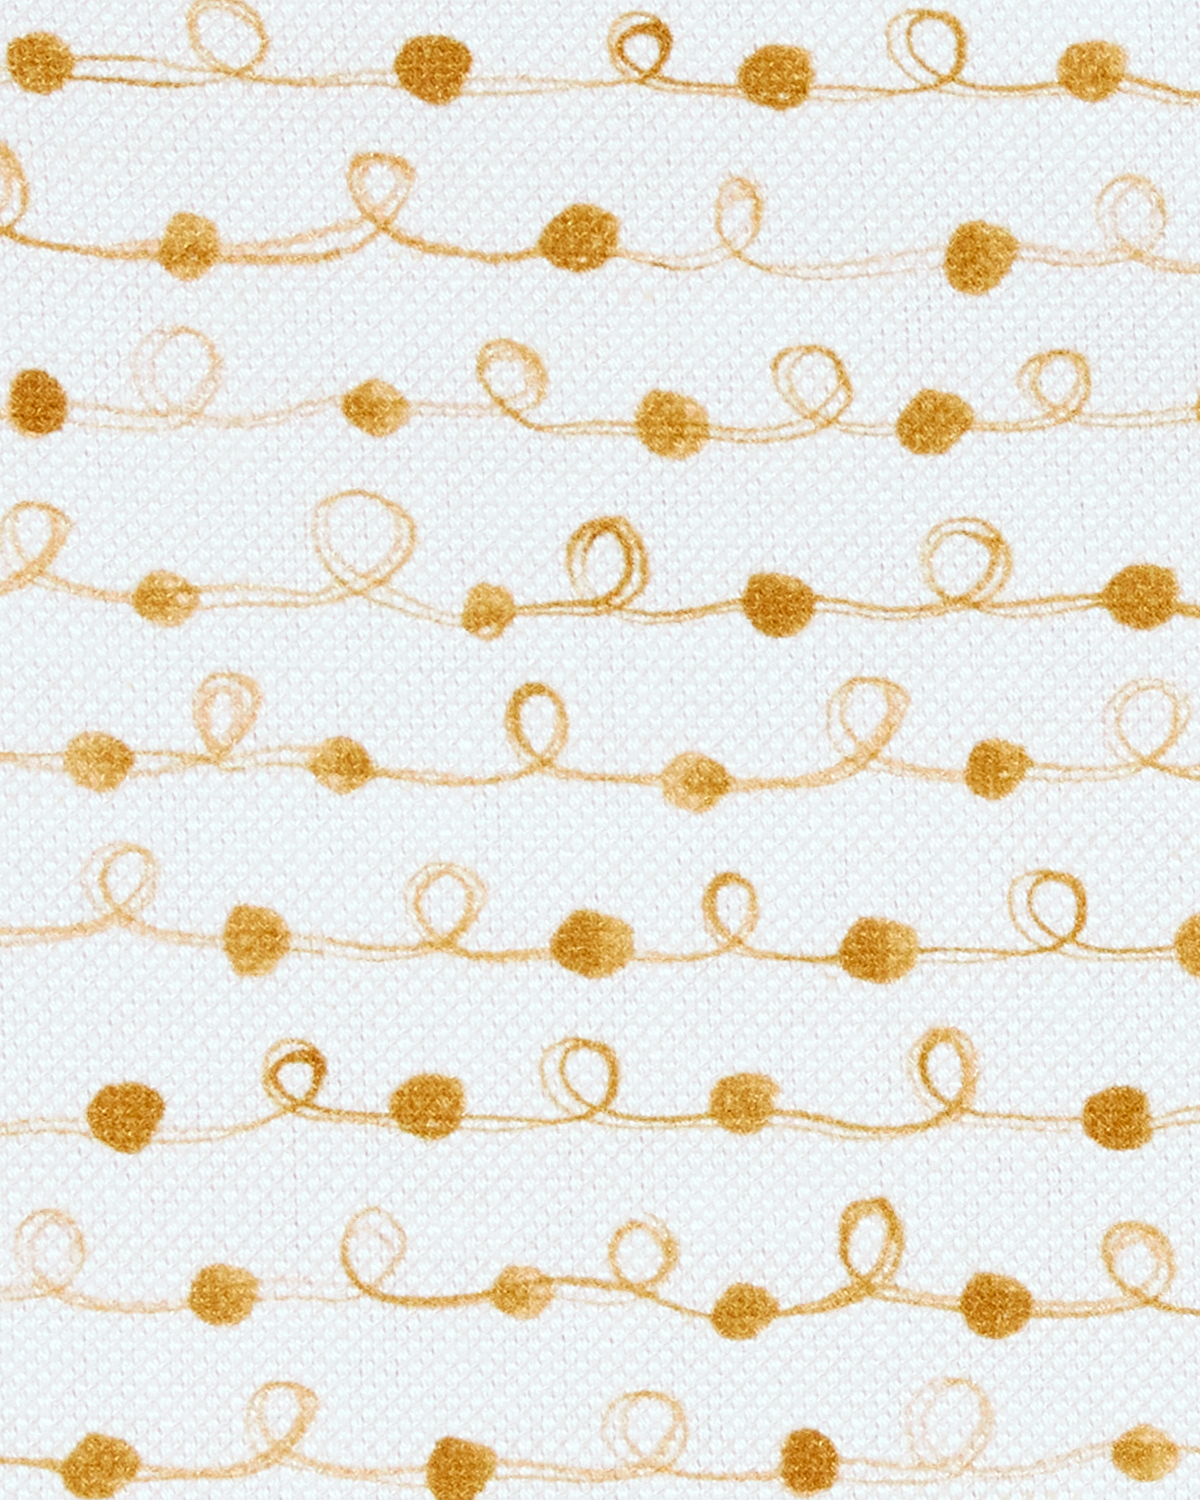 Beaded Ribbon Fabric in Goldenrod